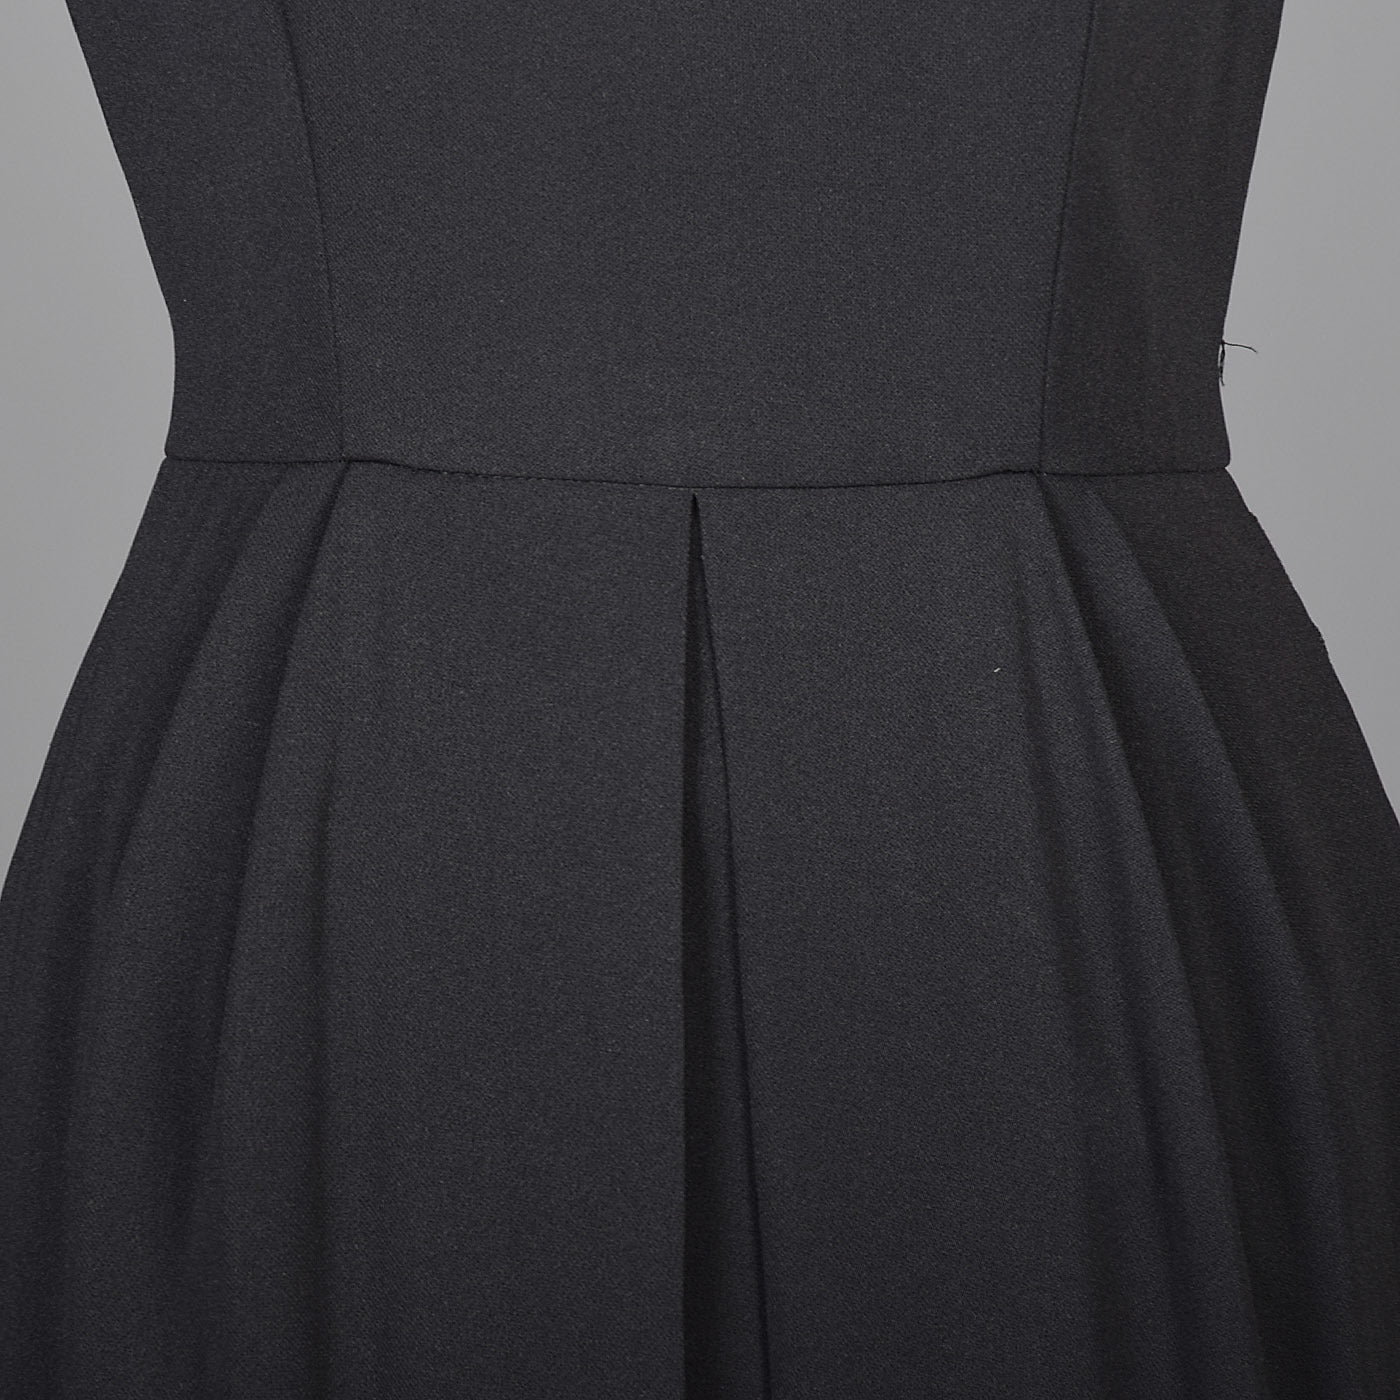 1960s Little Black Dress with Petal Skirt